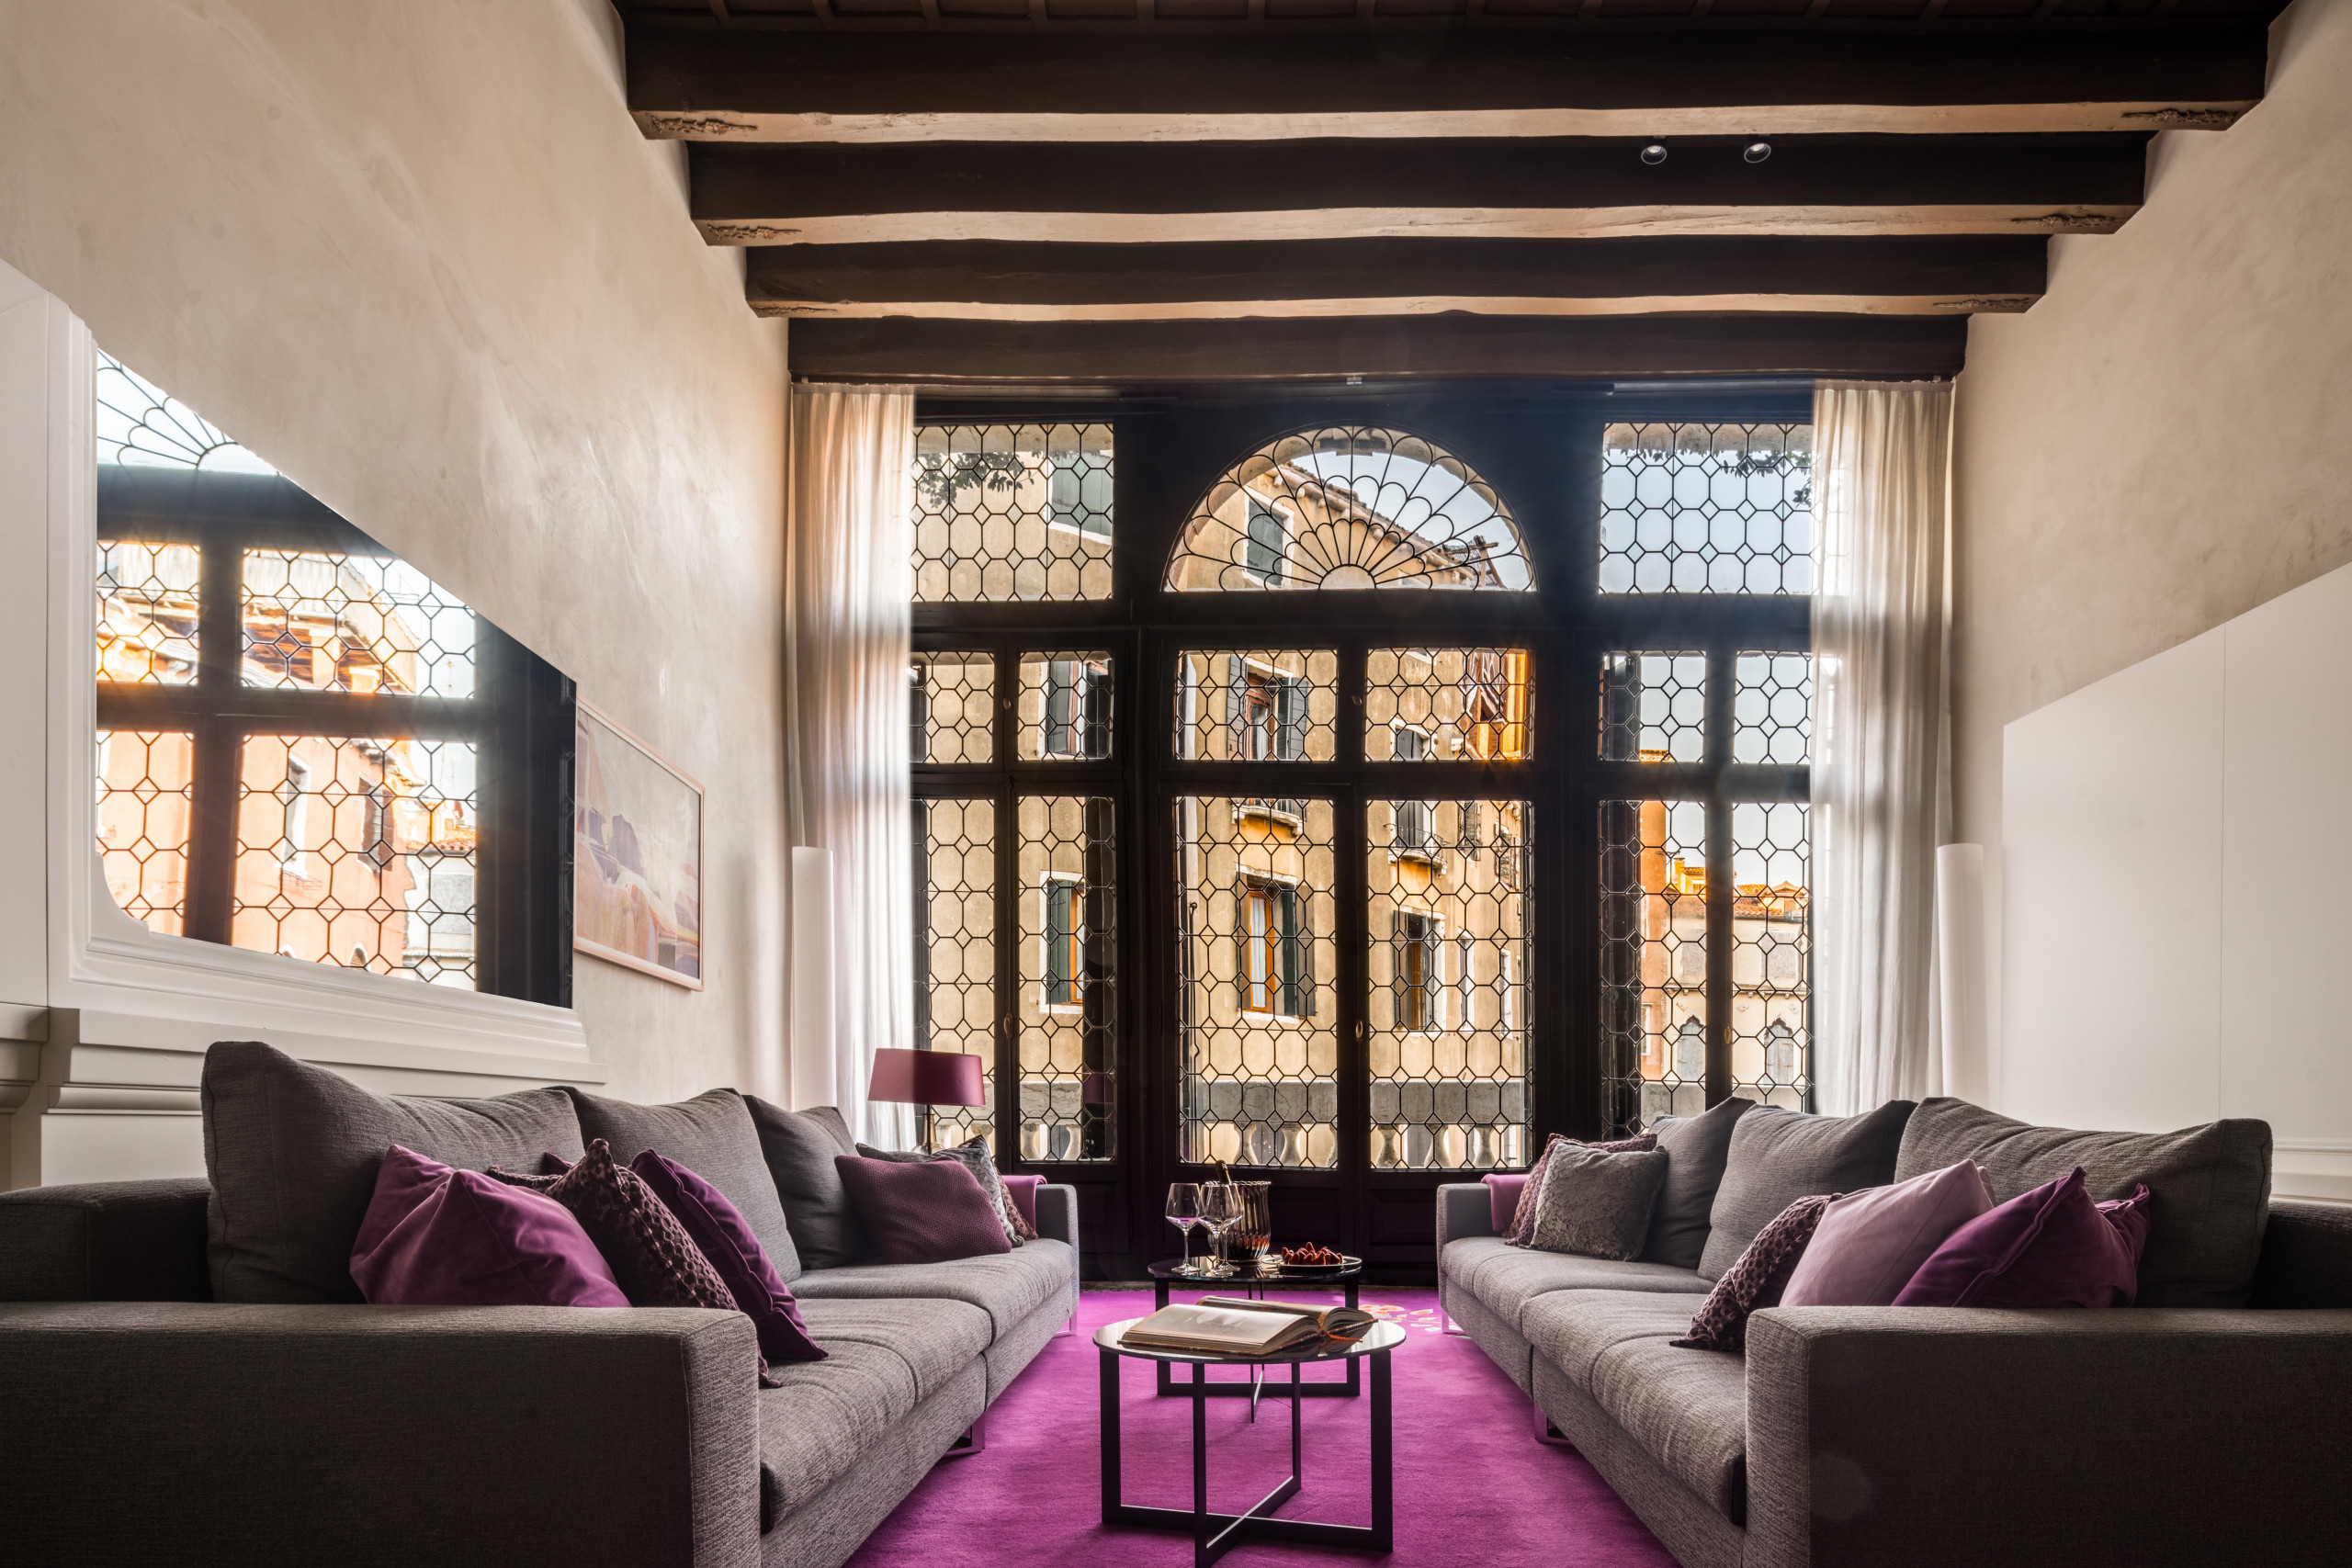  a Venezia - Palazzo Soranzo Noble Floor R&R